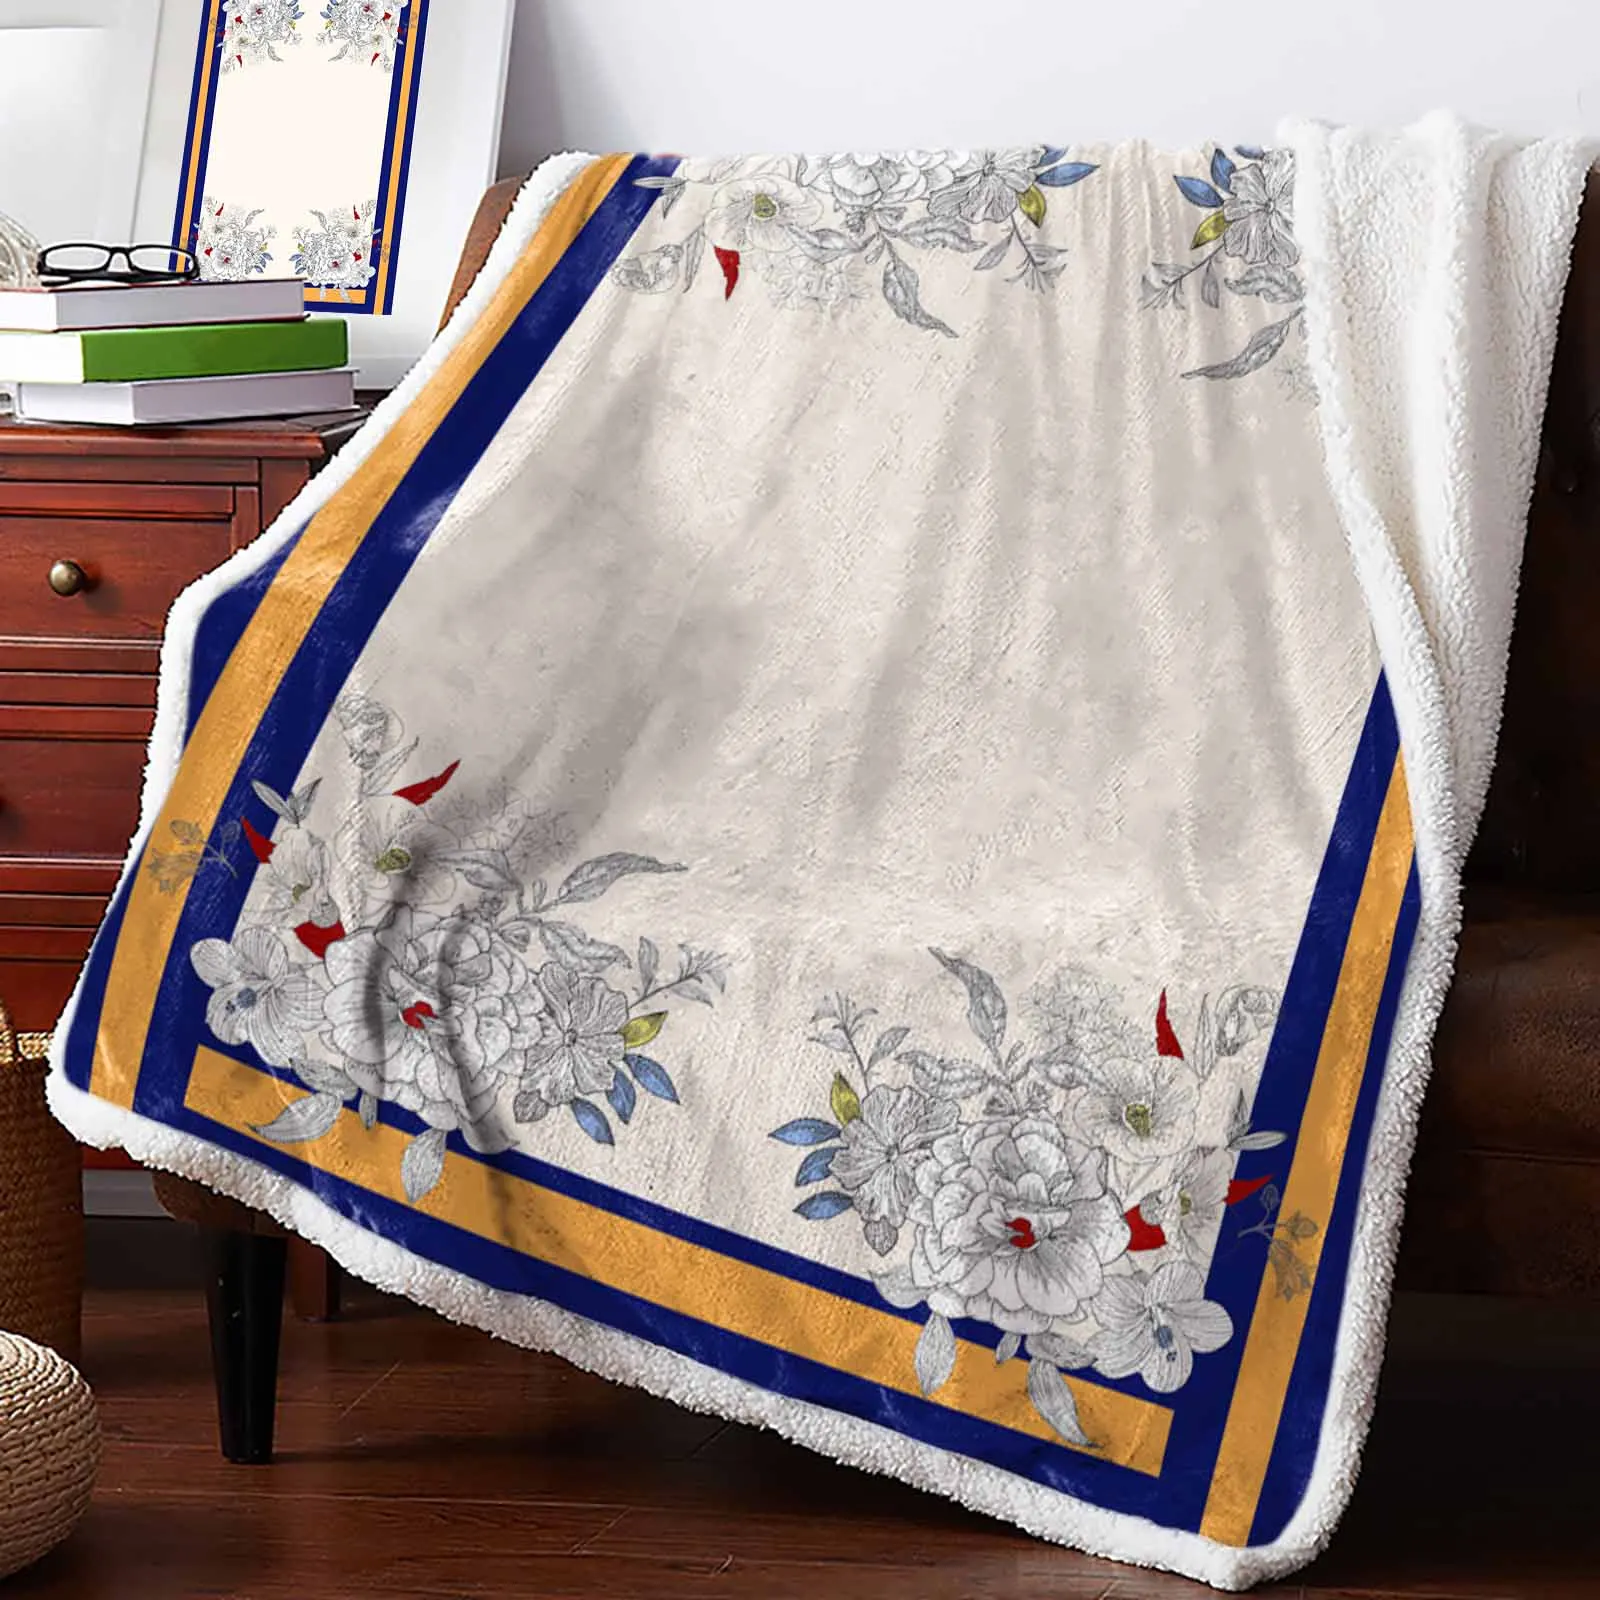 

Flower Stripes Blue Cashmere Blanket Warm Winter Soft Throw Blankets for Beds Sofa Wool Blanket Bedspread